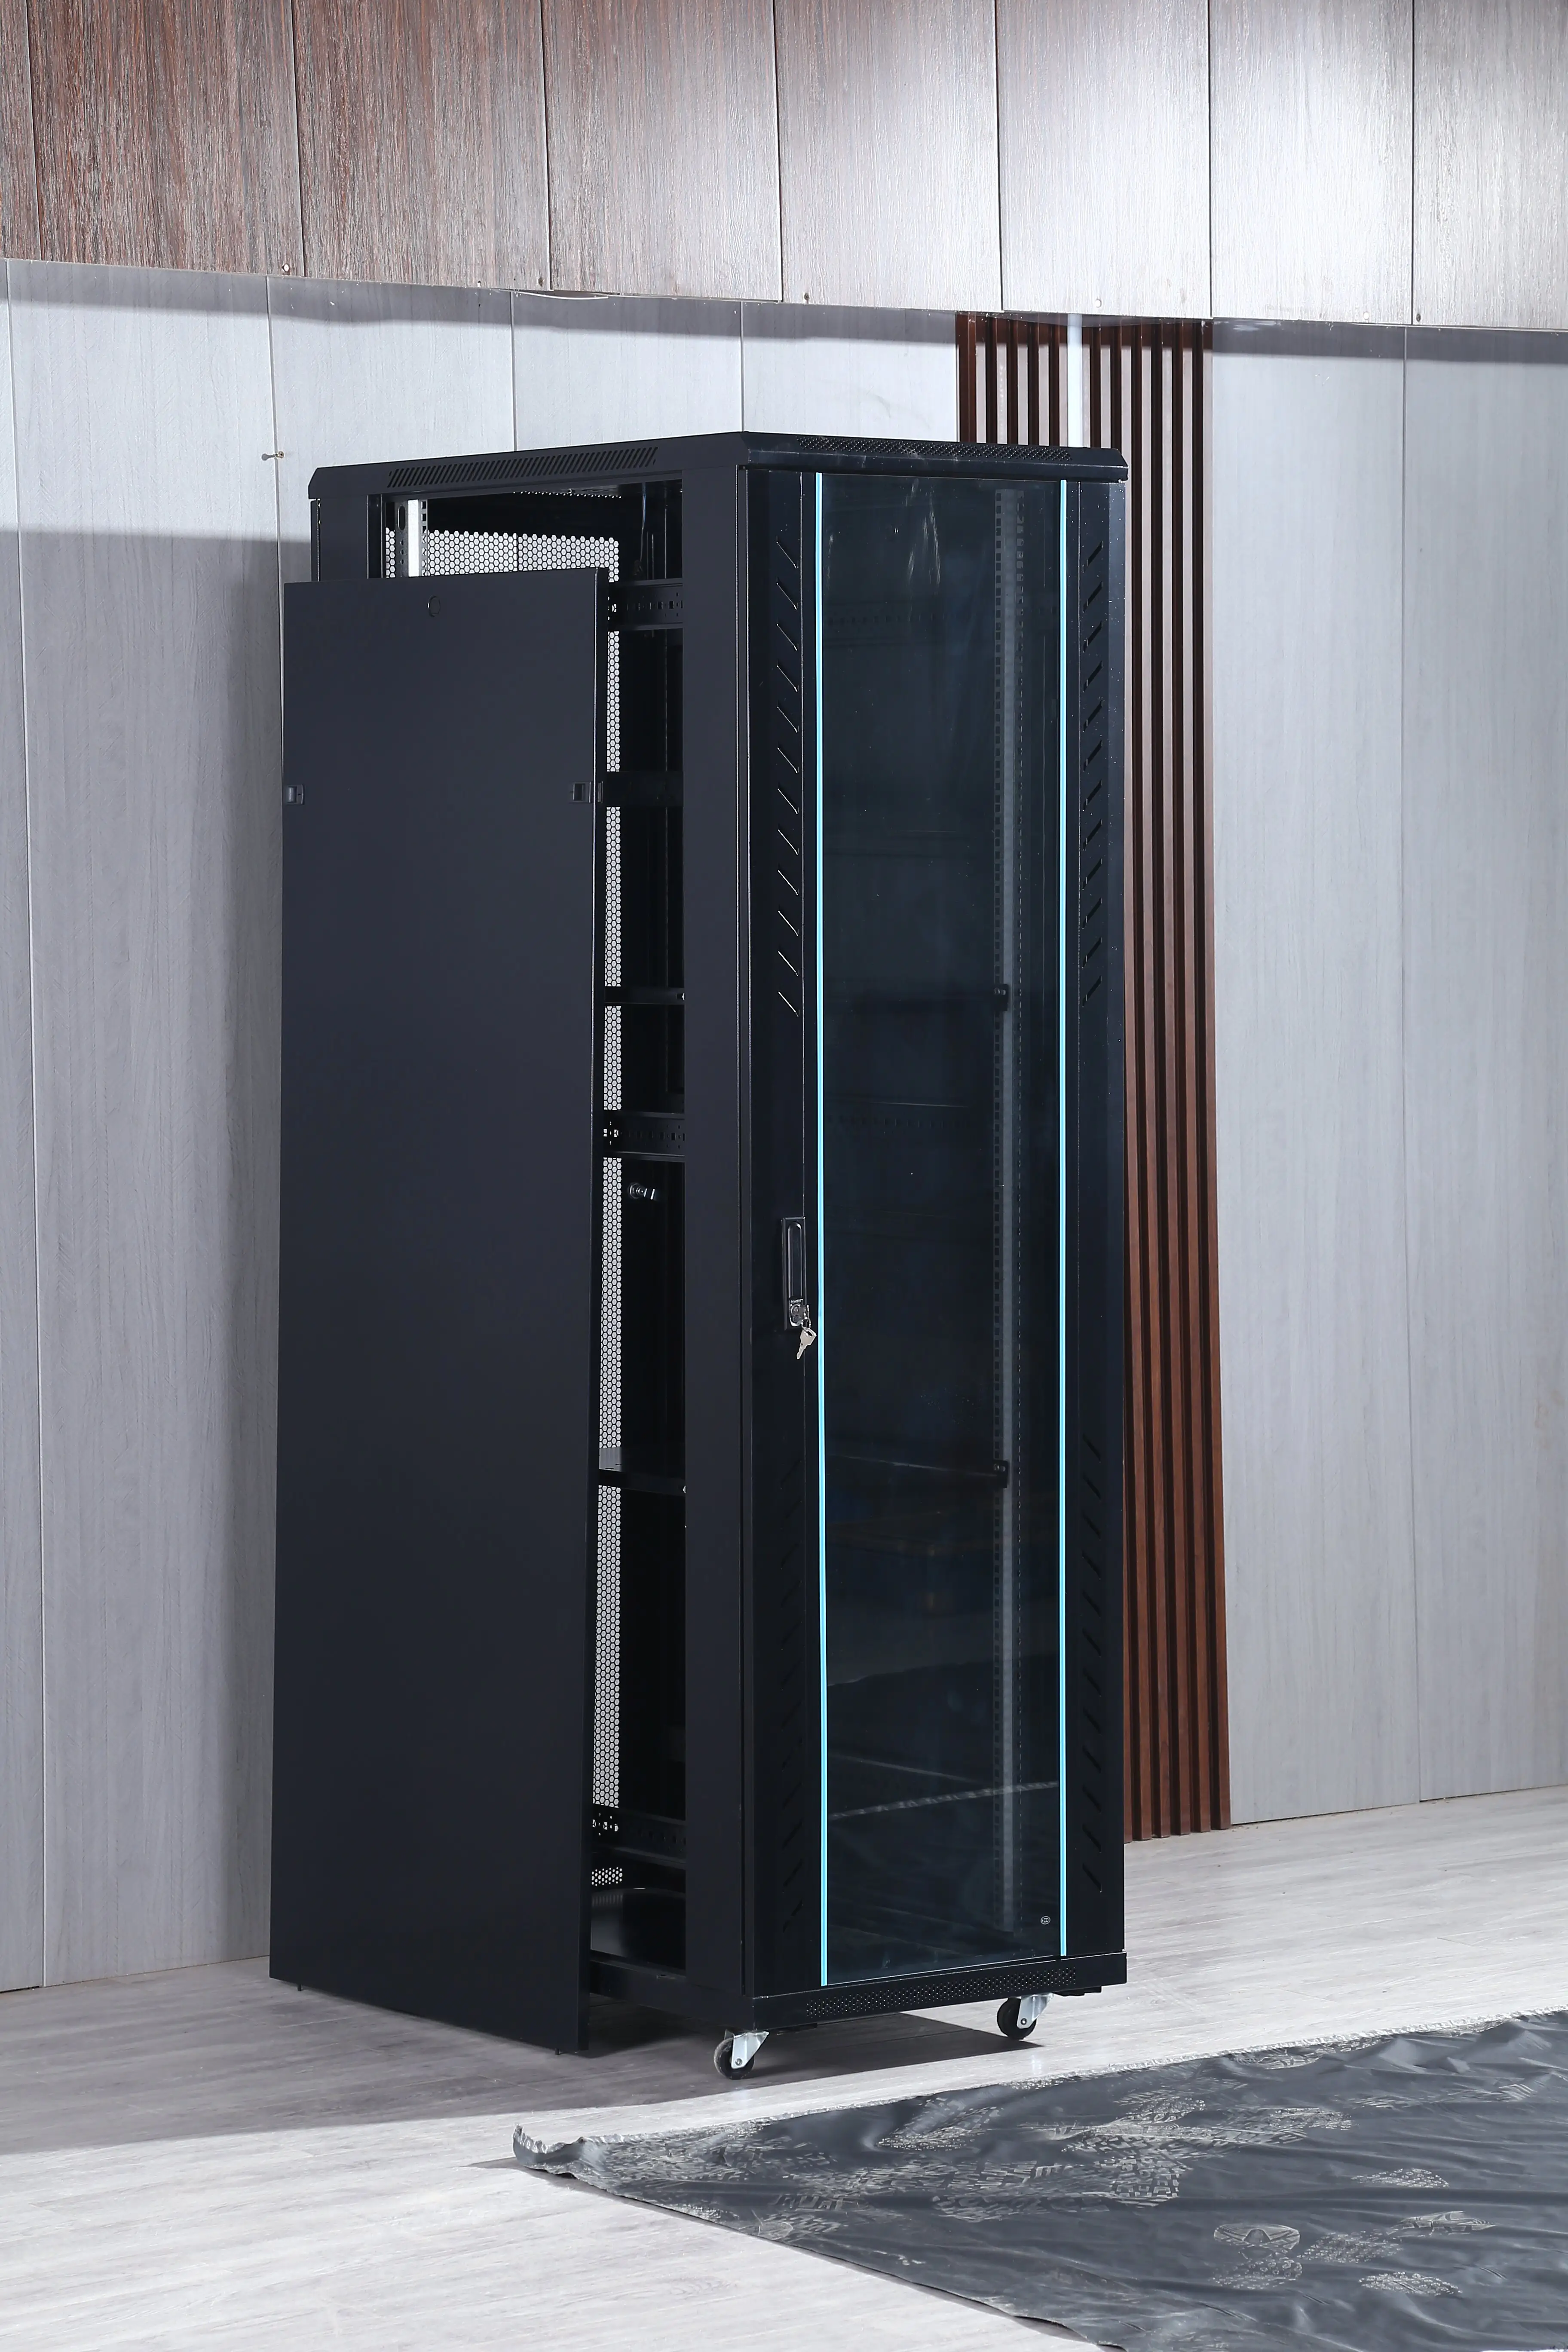 OEM Server Rack 18U 24U 32U 37U 42U outdoor Metal Network Cabinets data center server rack cabinetk